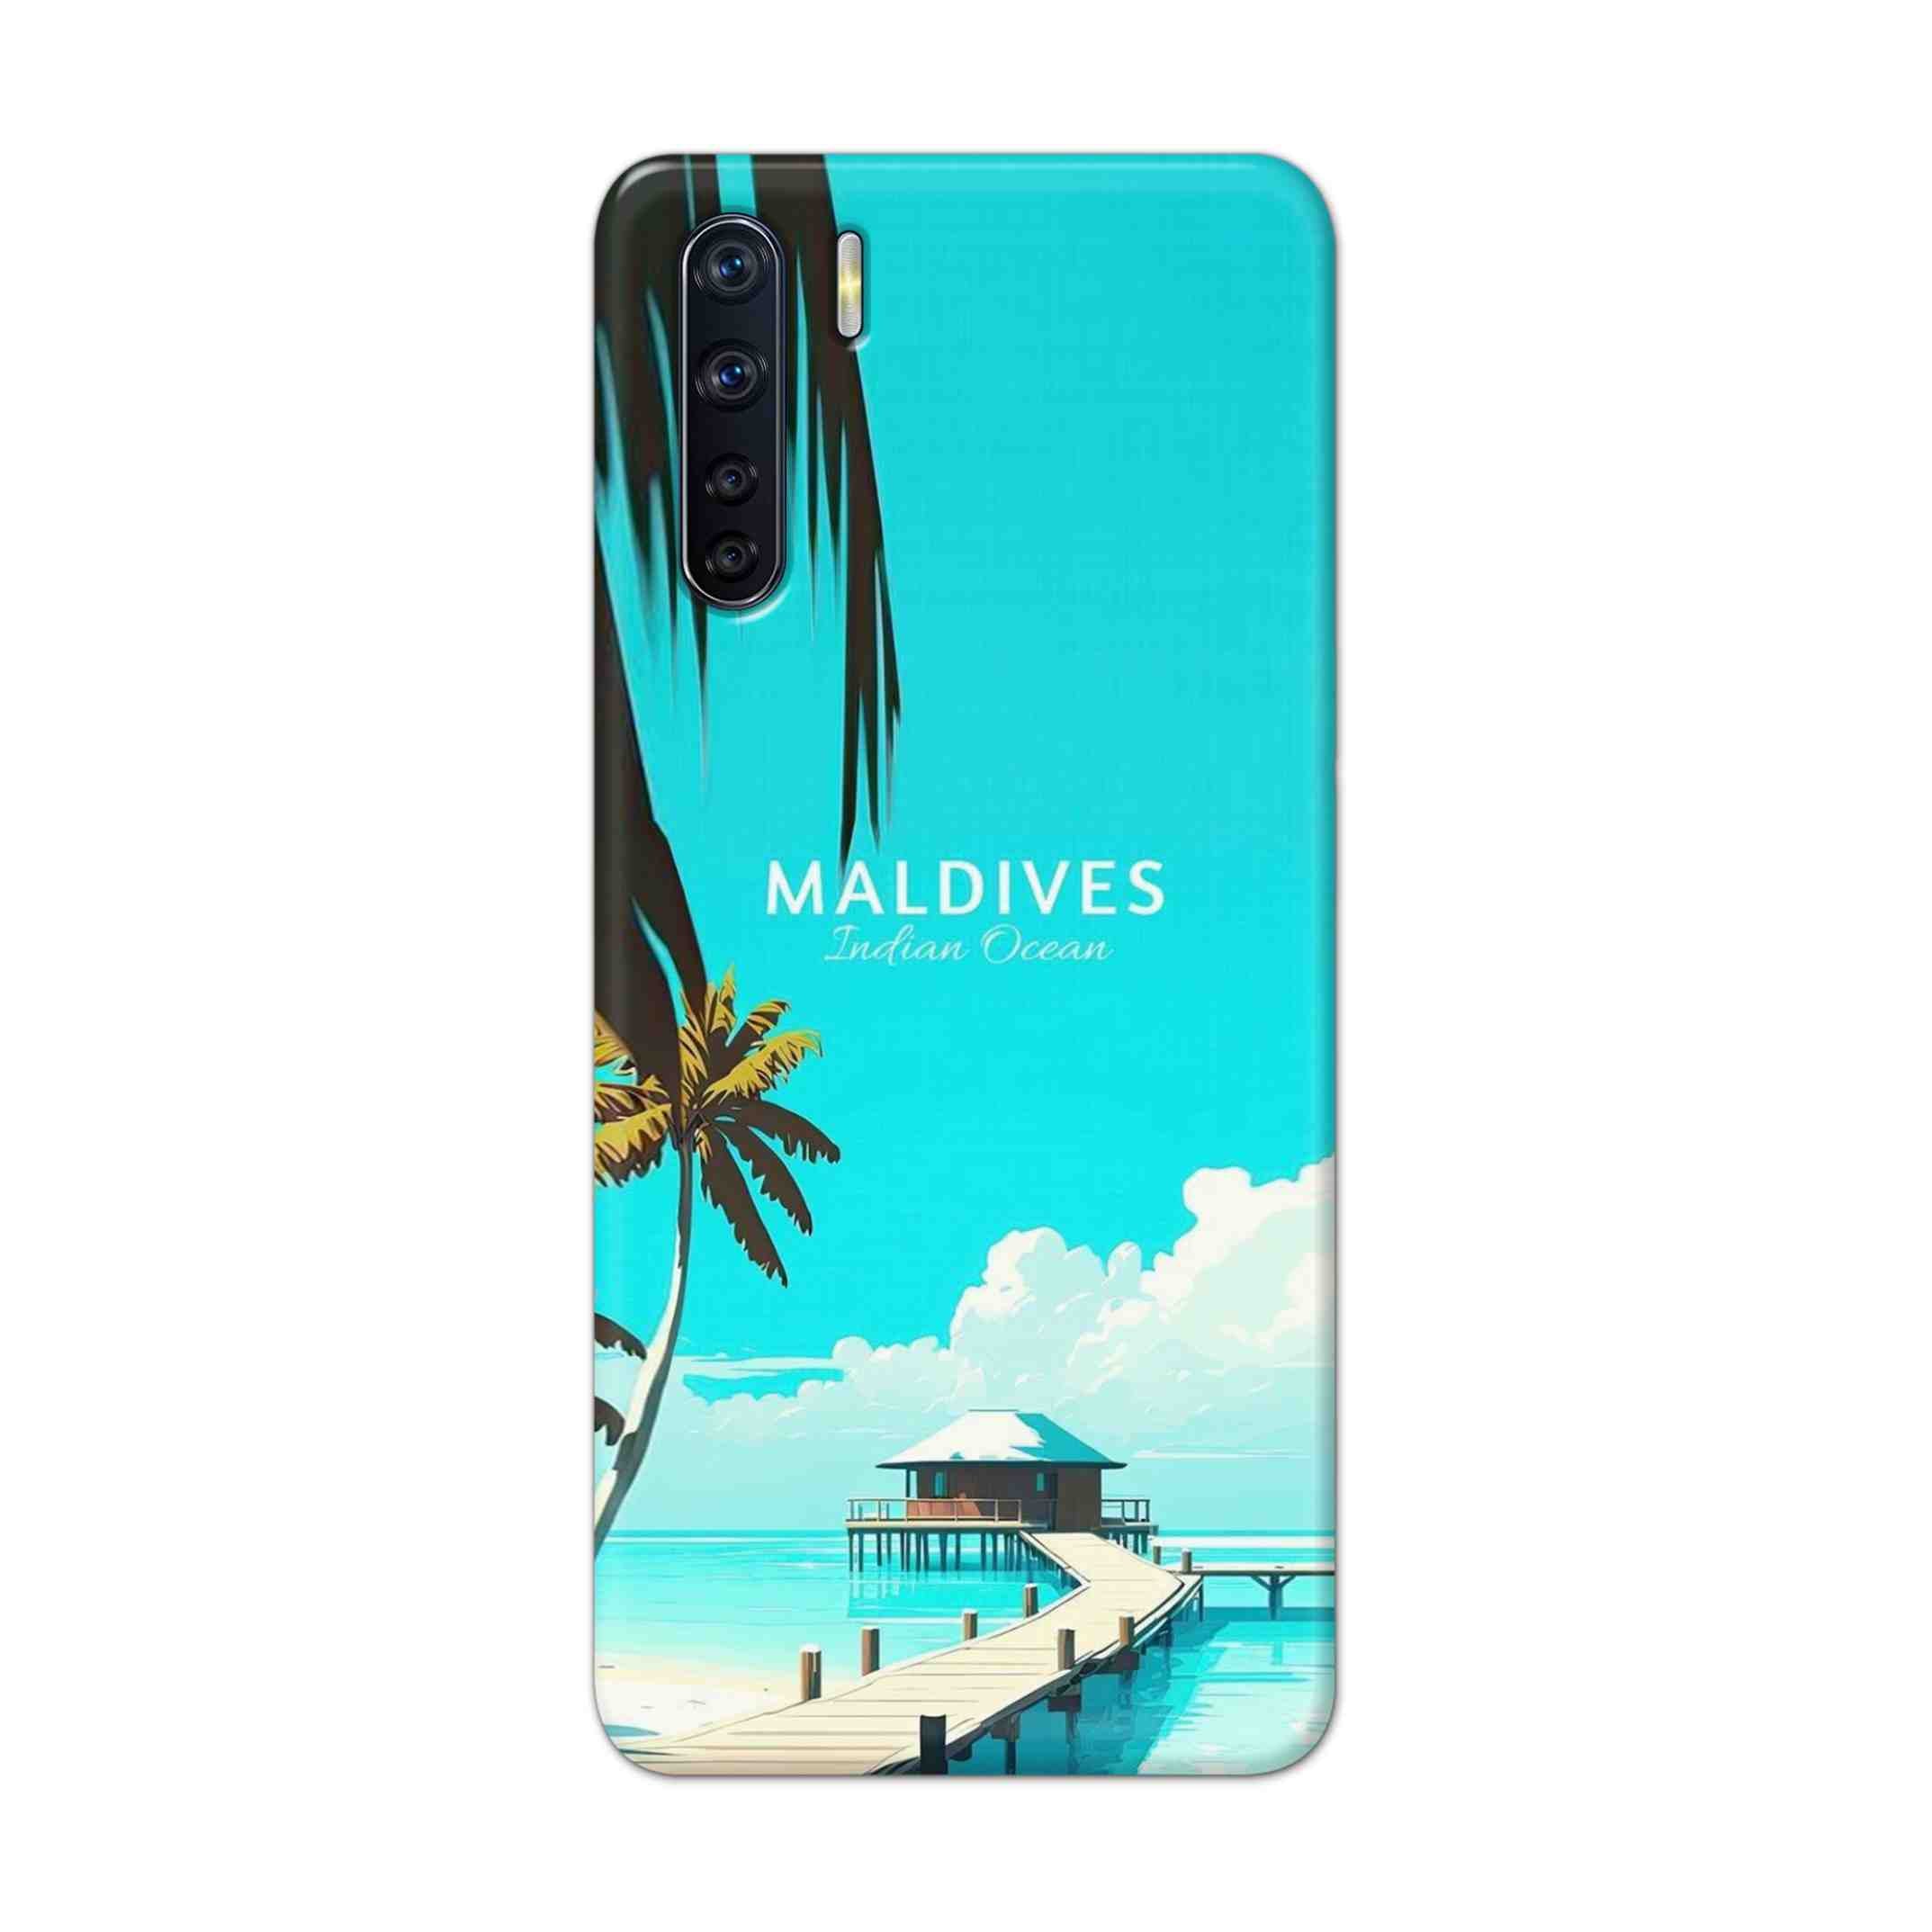 Buy Maldives Hard Back Mobile Phone Case Cover For OPPO F15 Online